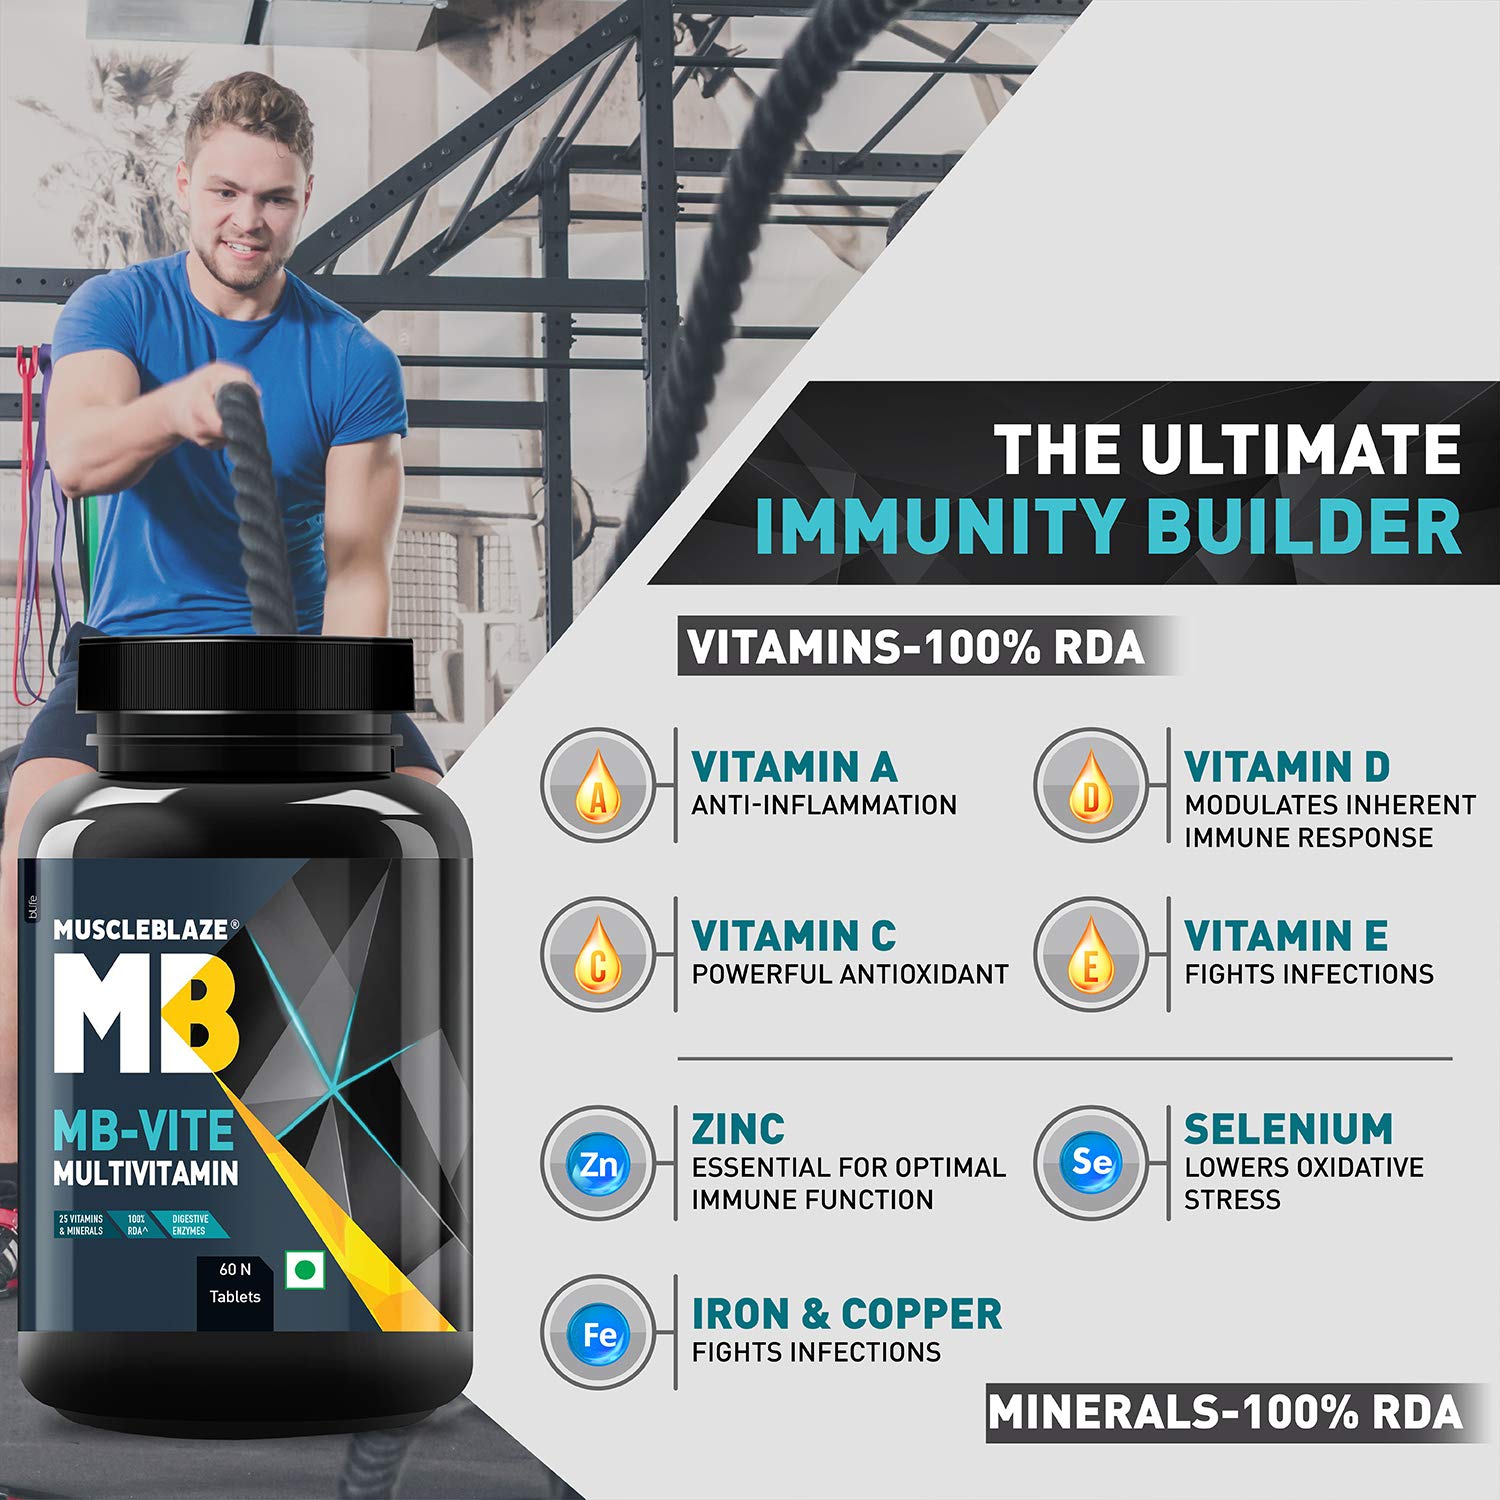 Image Of Muscleblaze Mb-Vite Multivitamin For Immunity-100% Rda Of Vit C, D, Zinc Beast Nutrition